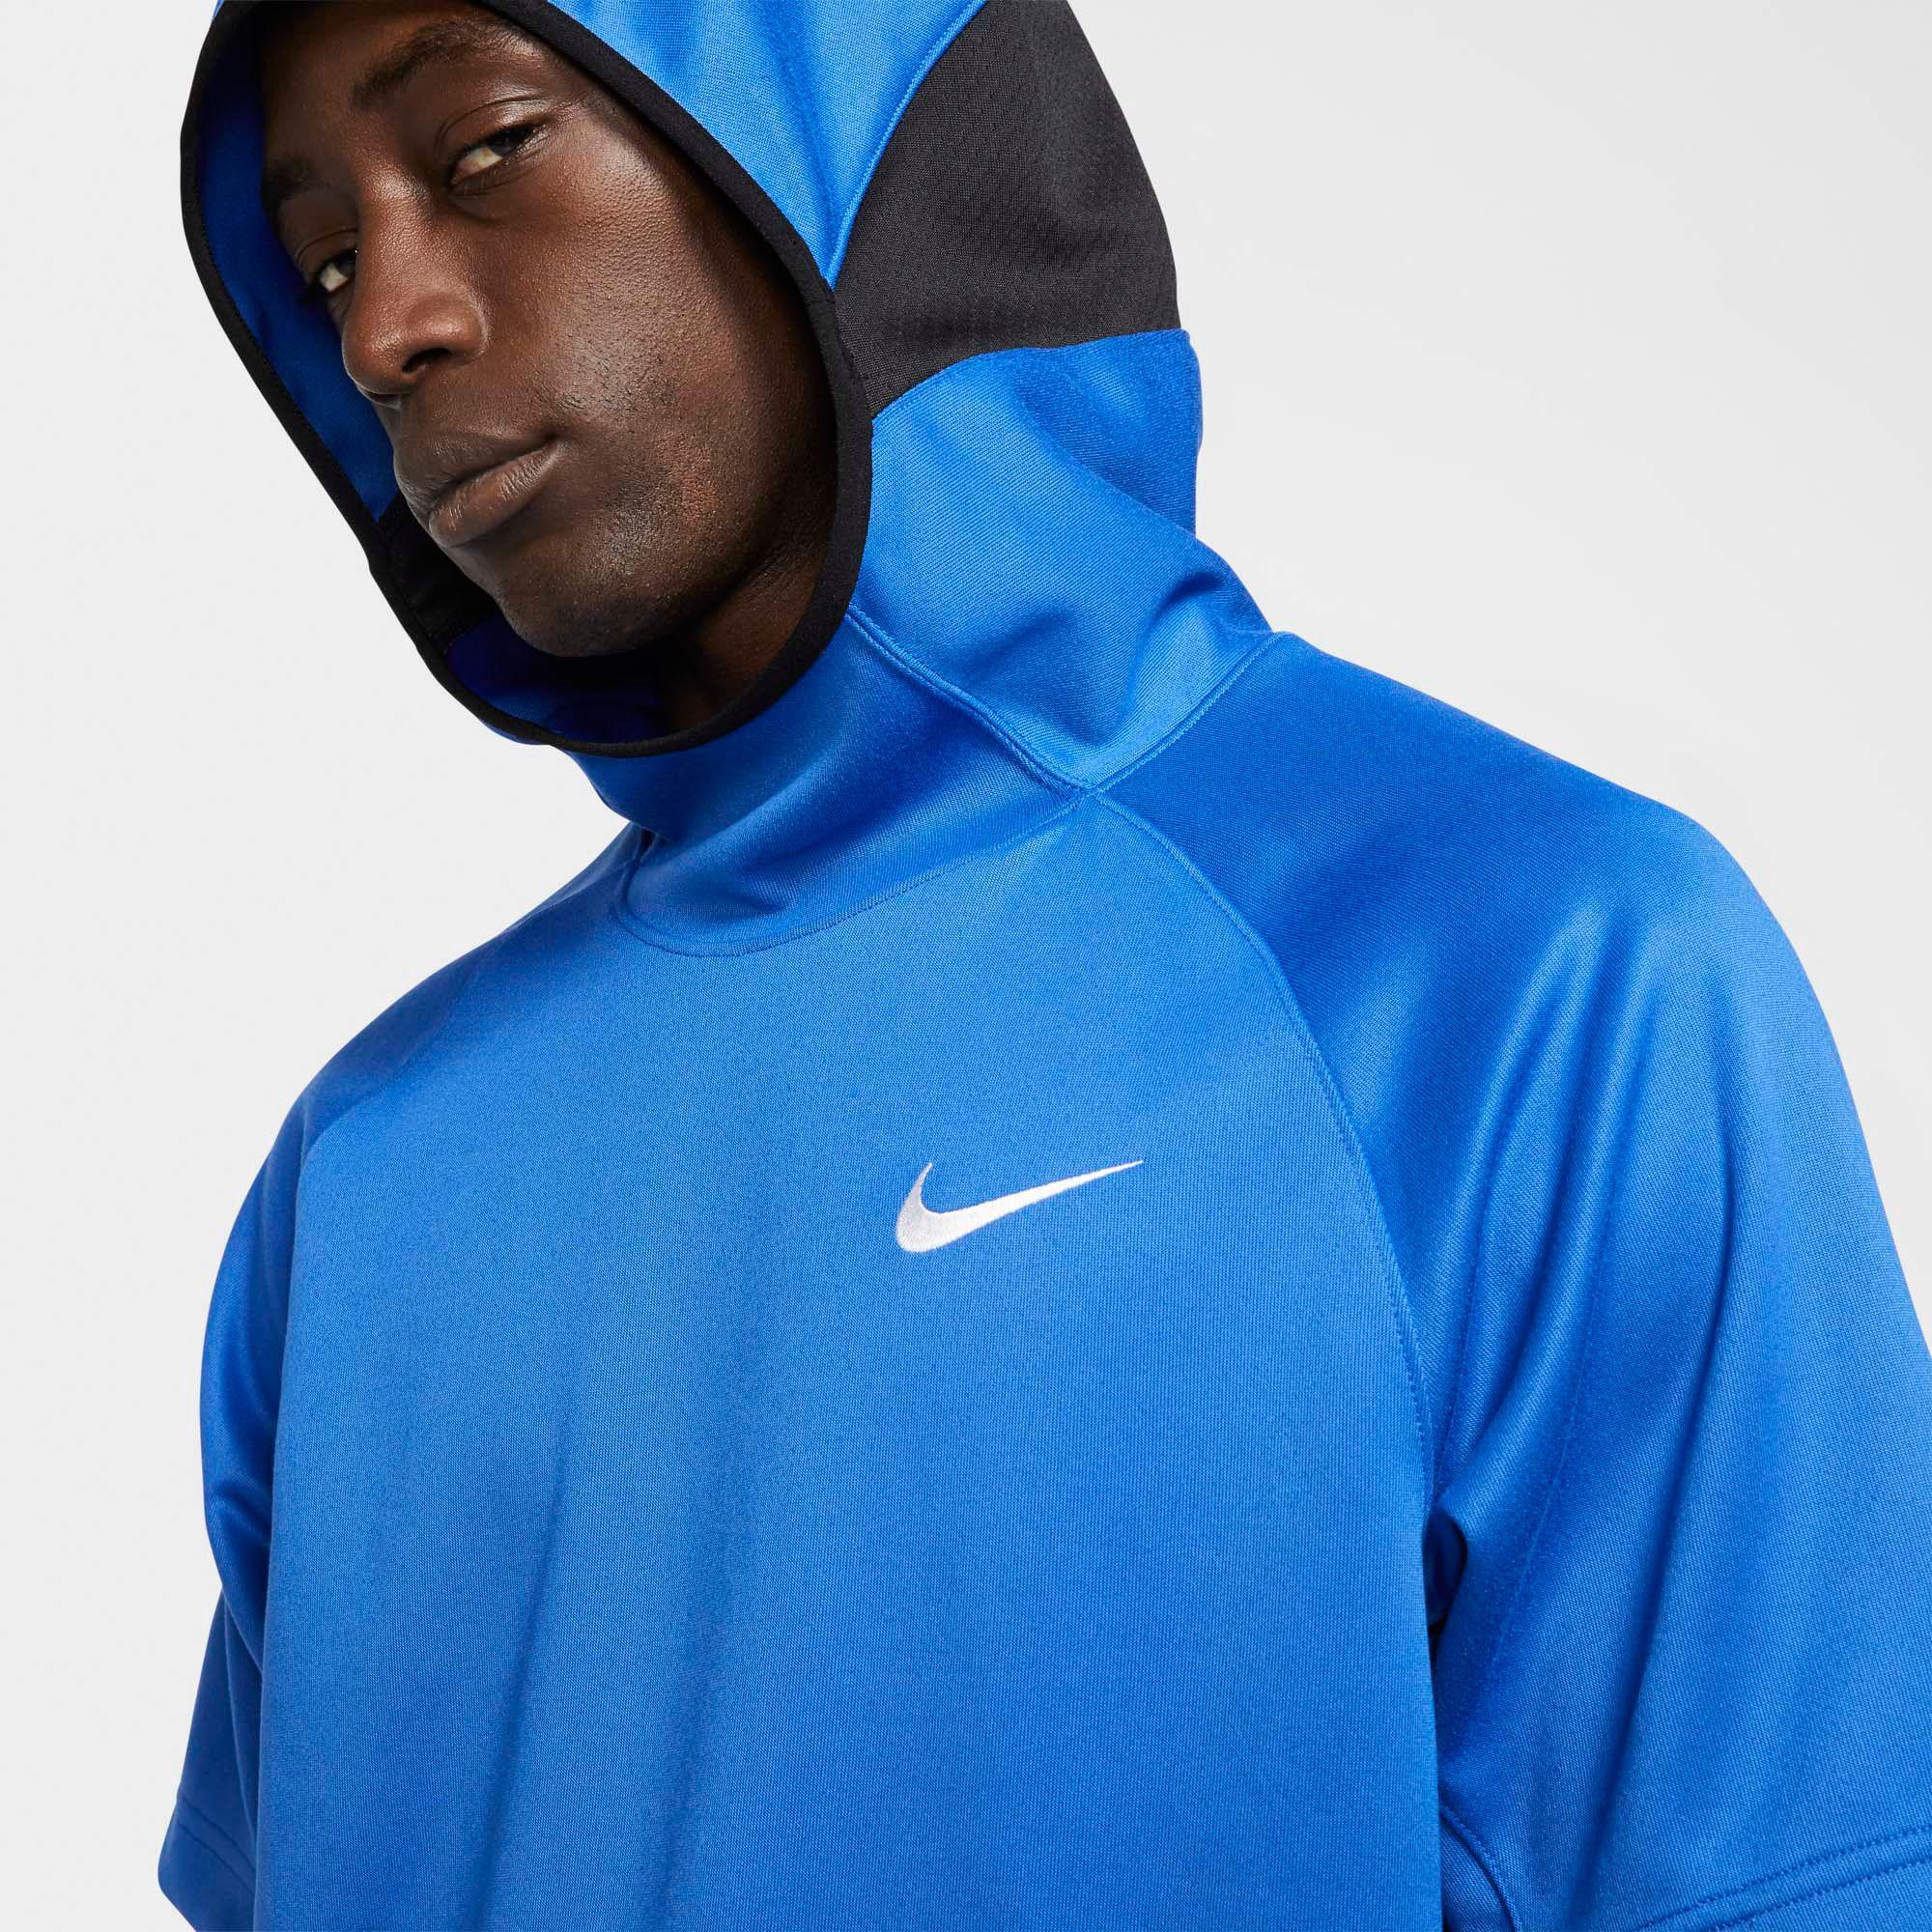 Nike Dri-fit Spotlight Short Sleeve Hoodie in Blue for Men - Lyst